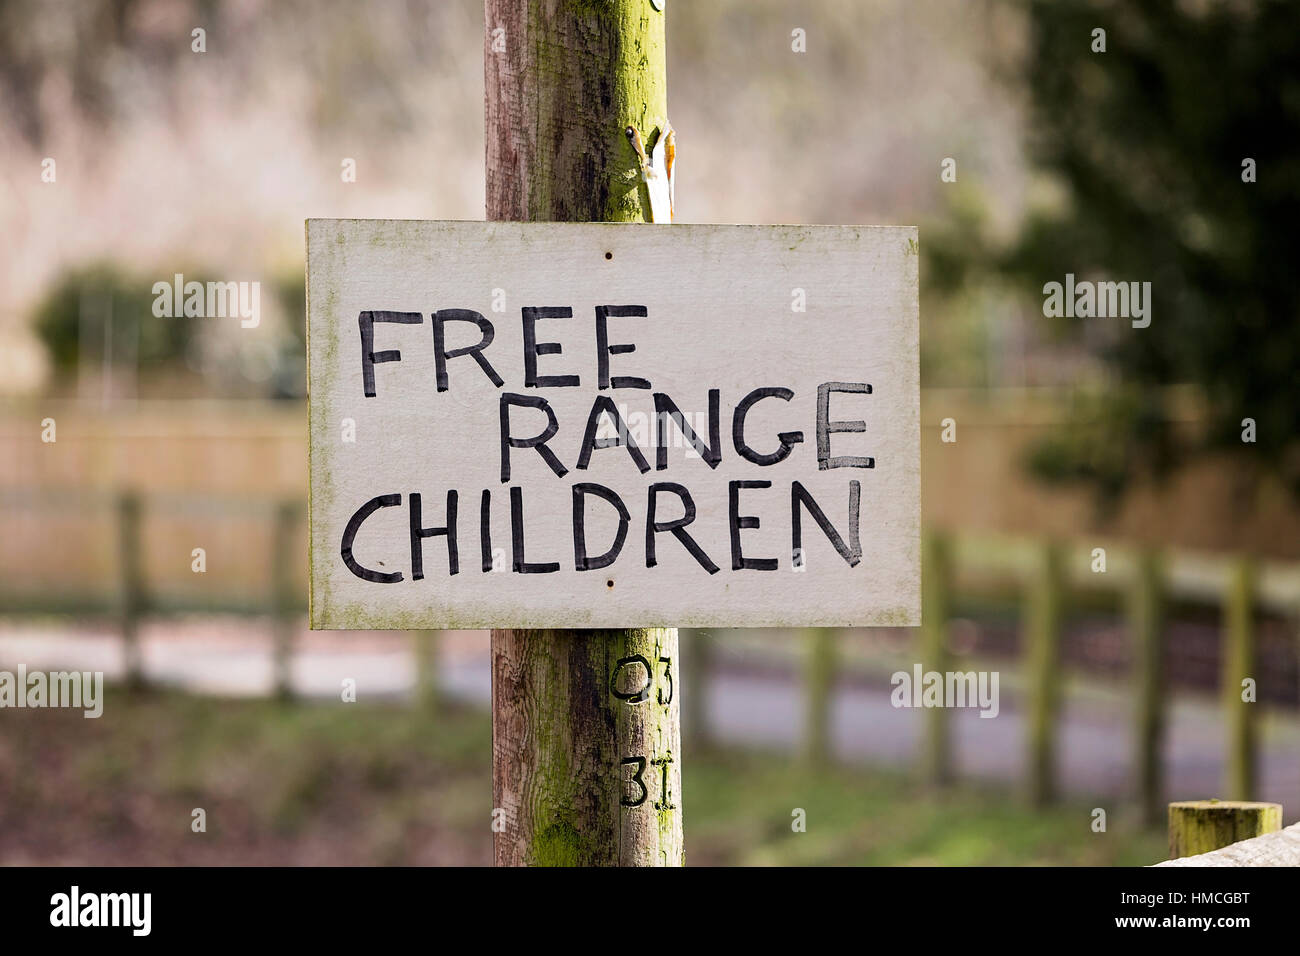 Free Range Children sign on post Stock Photo